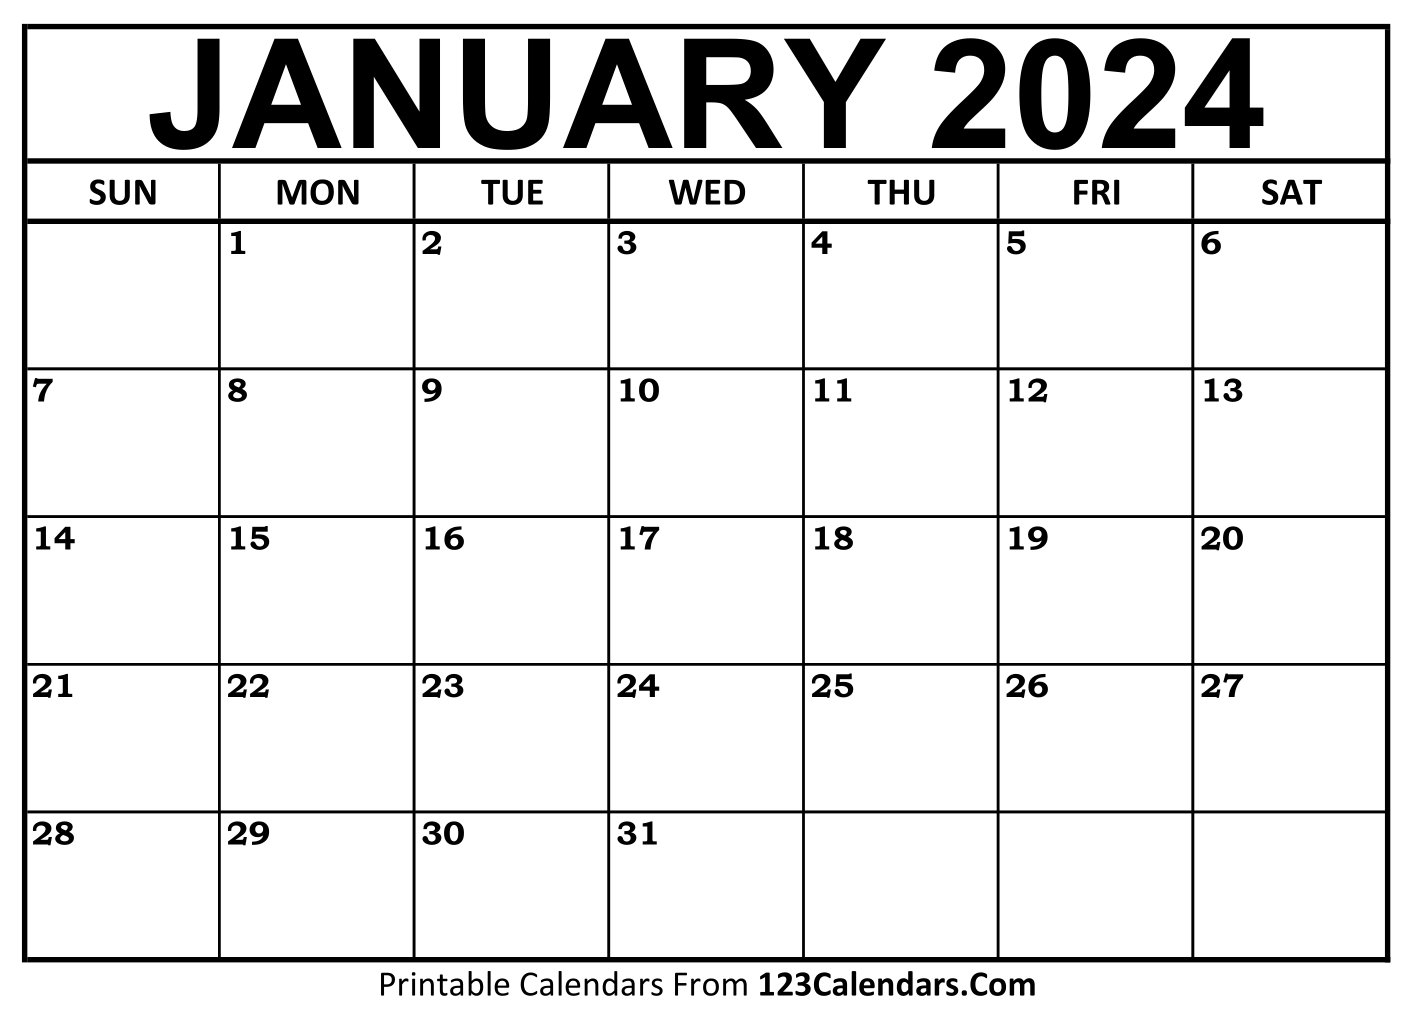 Printable January 2024 Calendar Templates - 123Calendars for Monthly Calendar January 2024 Printable